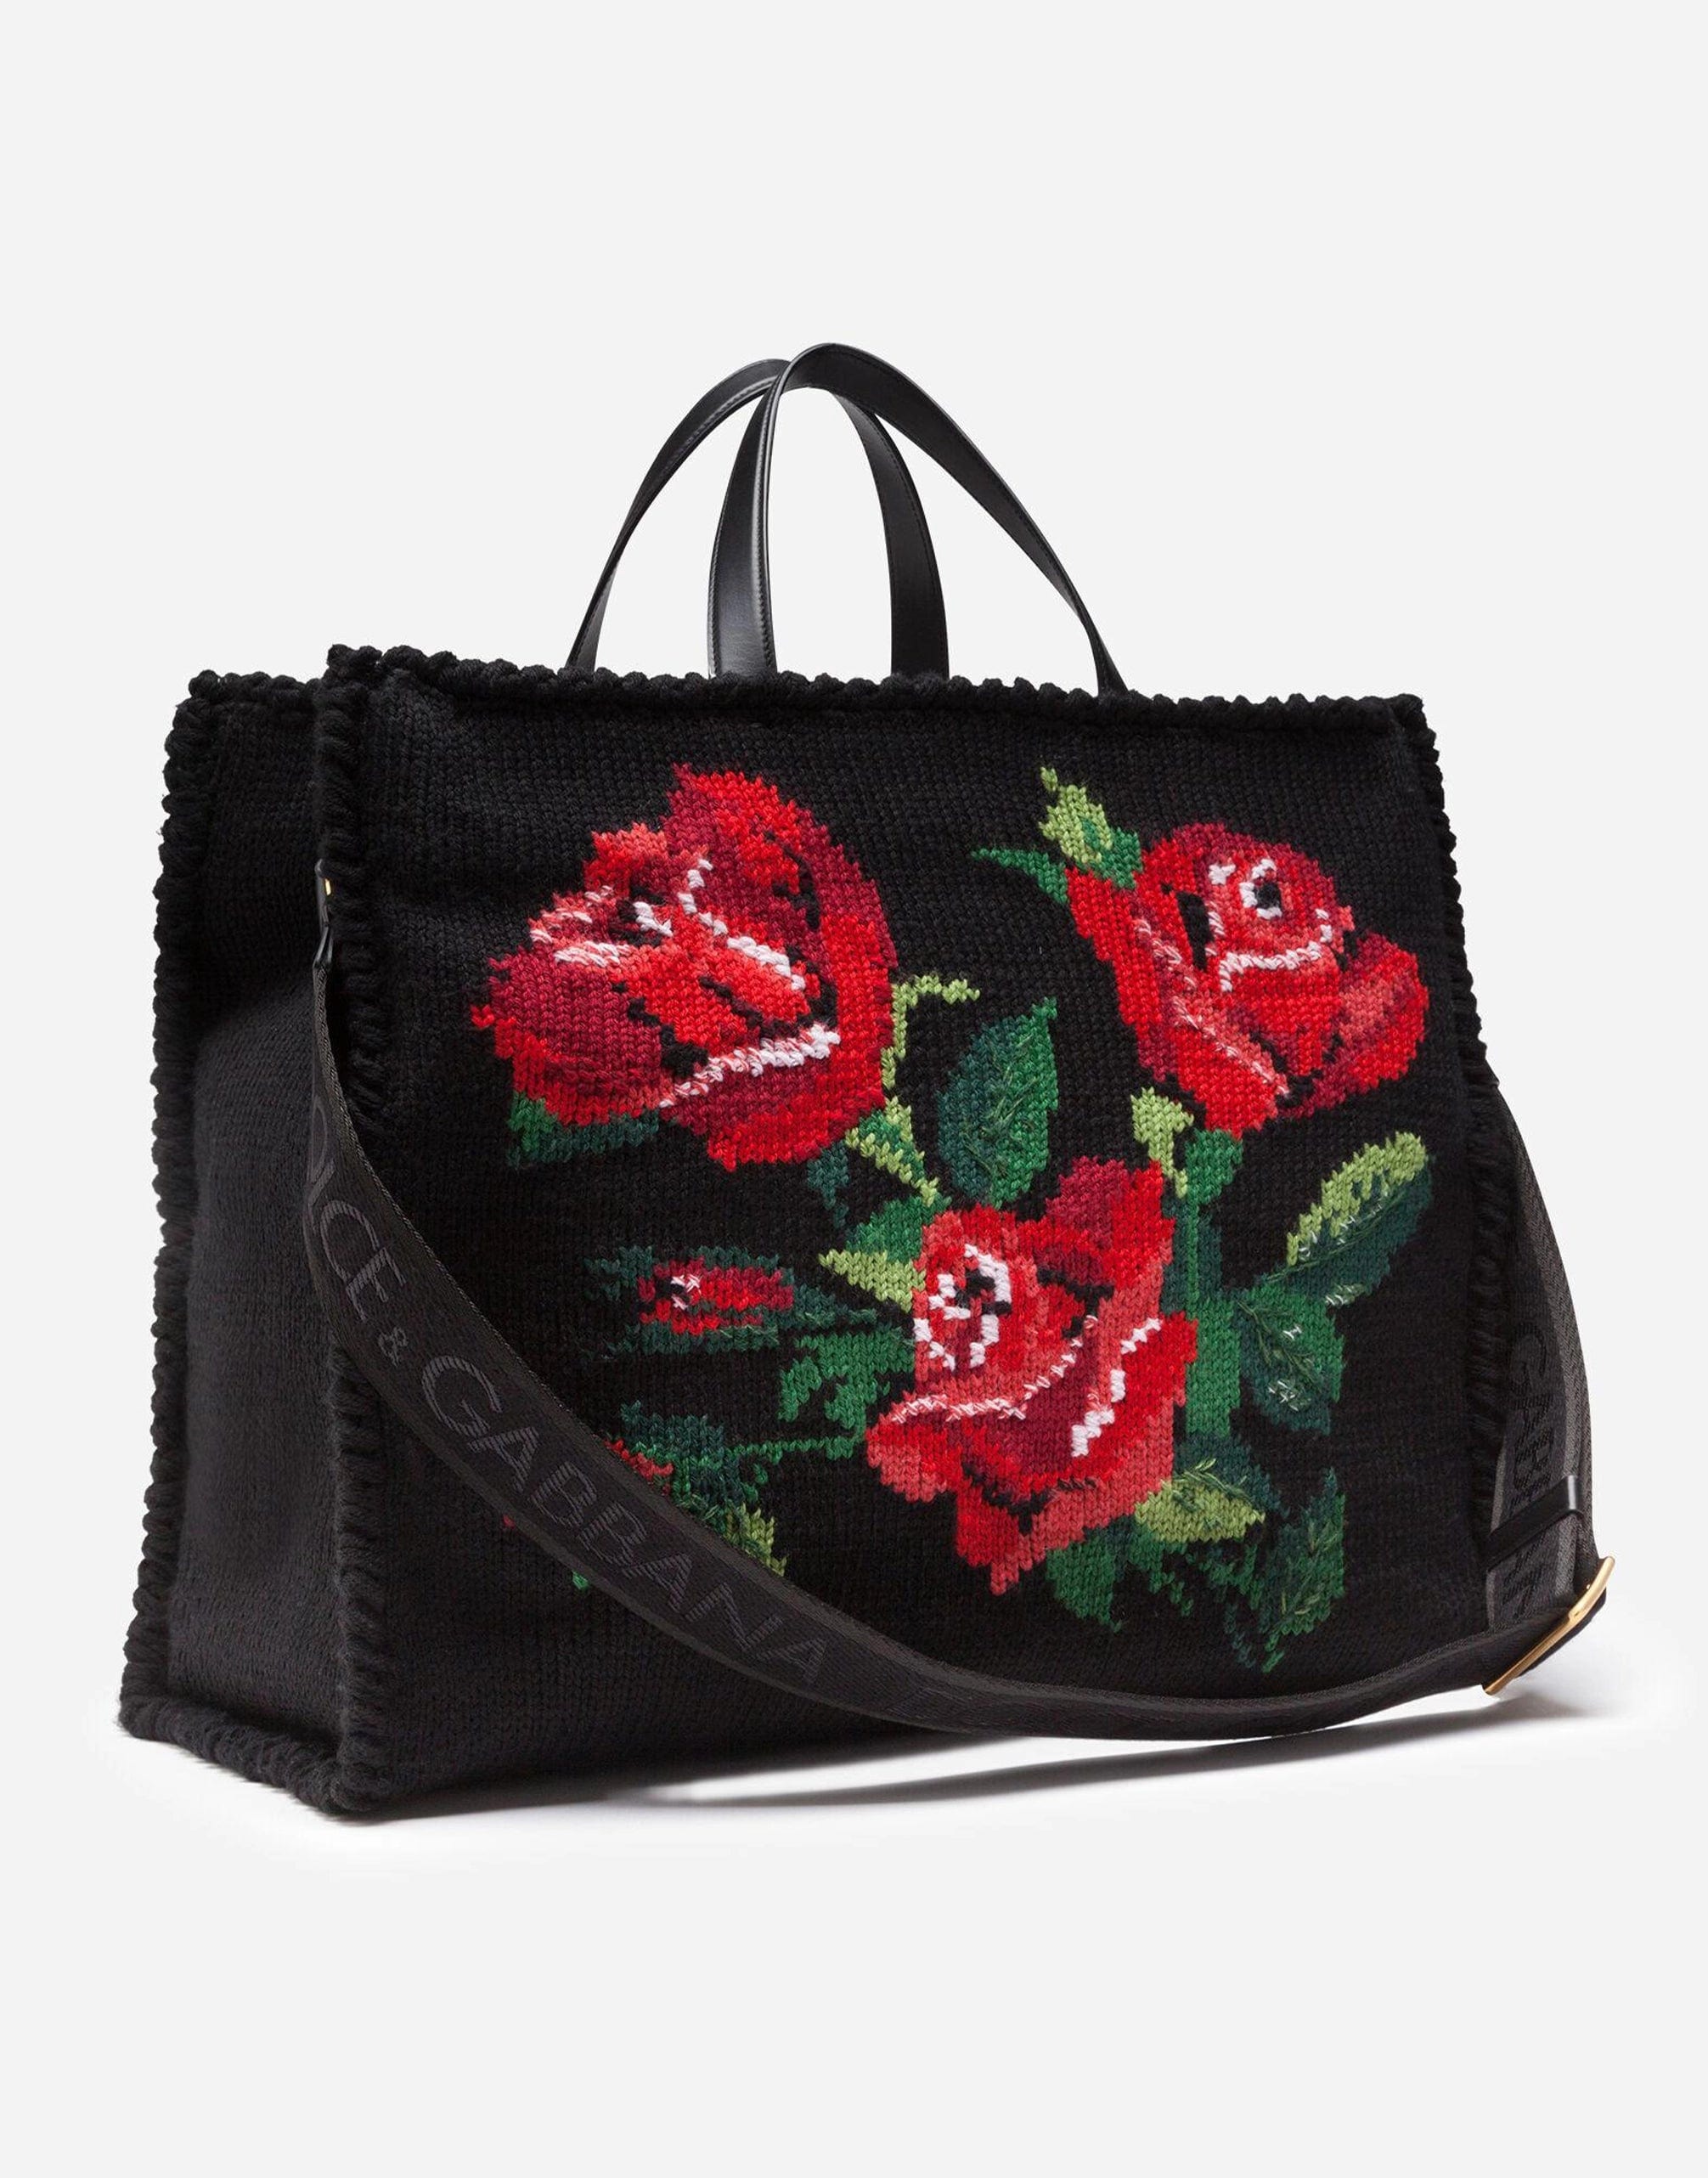 Gran bolso de Beatrice con rosas bordadas